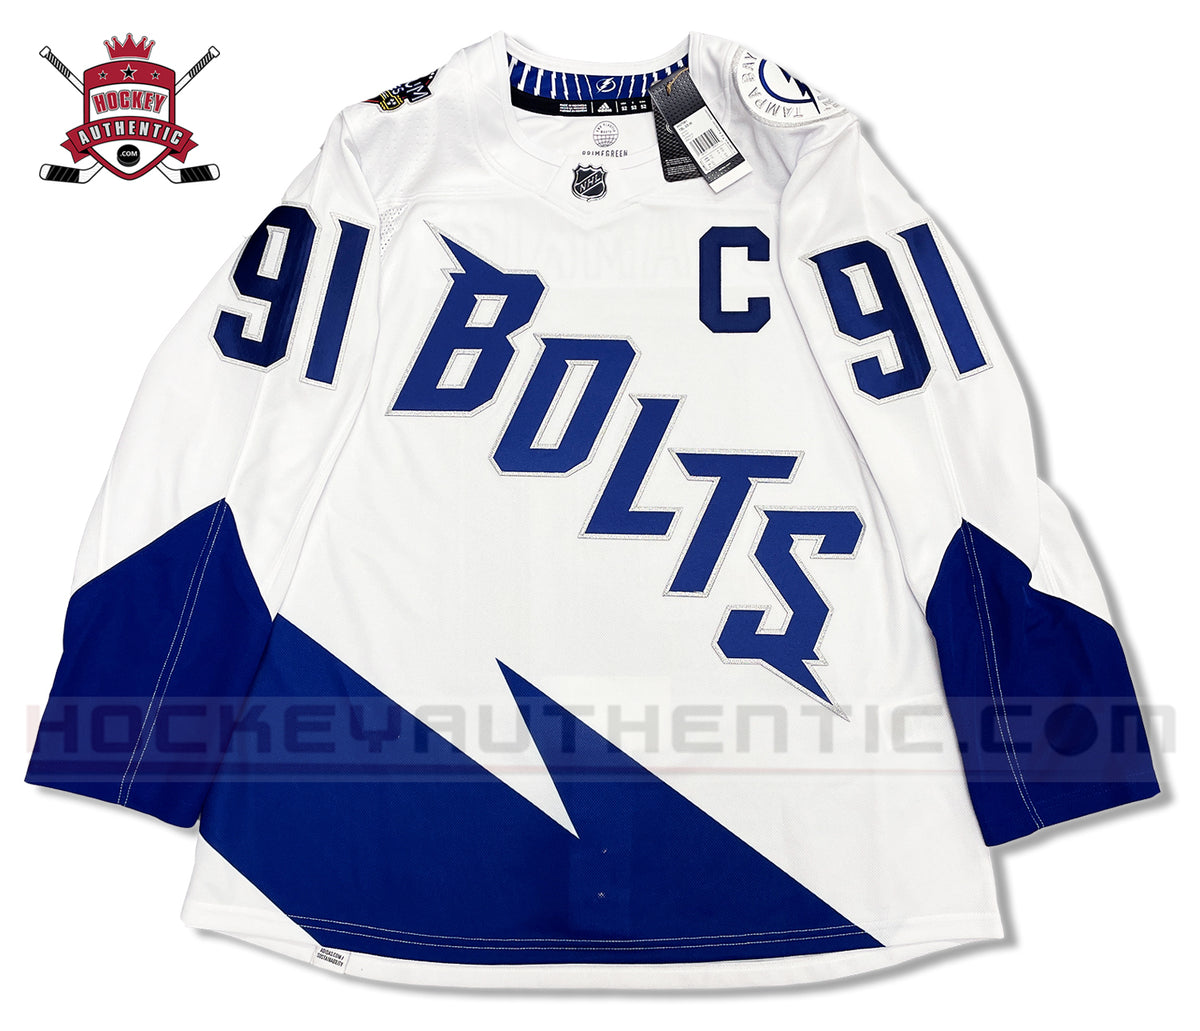 Lightning release jersey for Stadium Series game